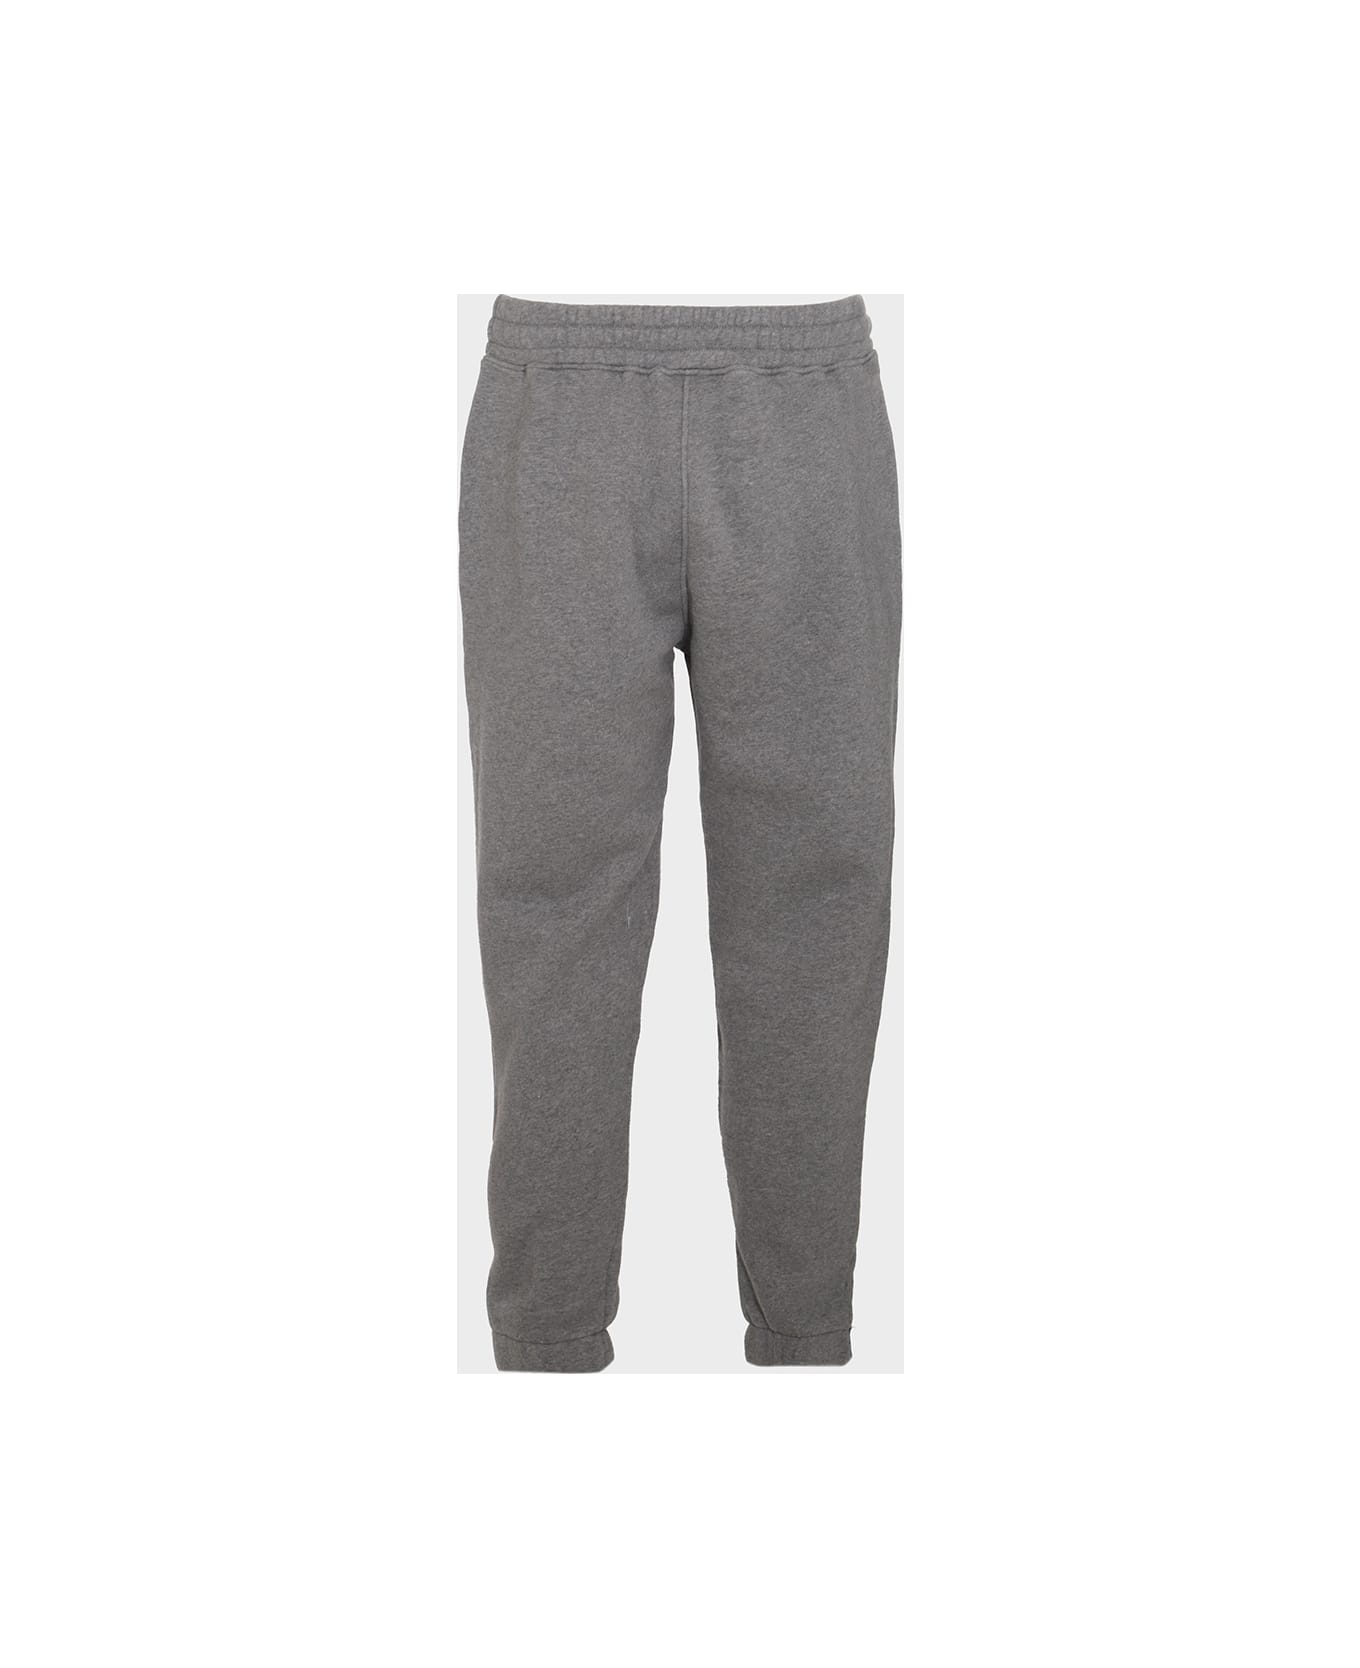 Maison Kitsuné Grey Cotton Pants - Medium Grey Melange スウェットパンツ